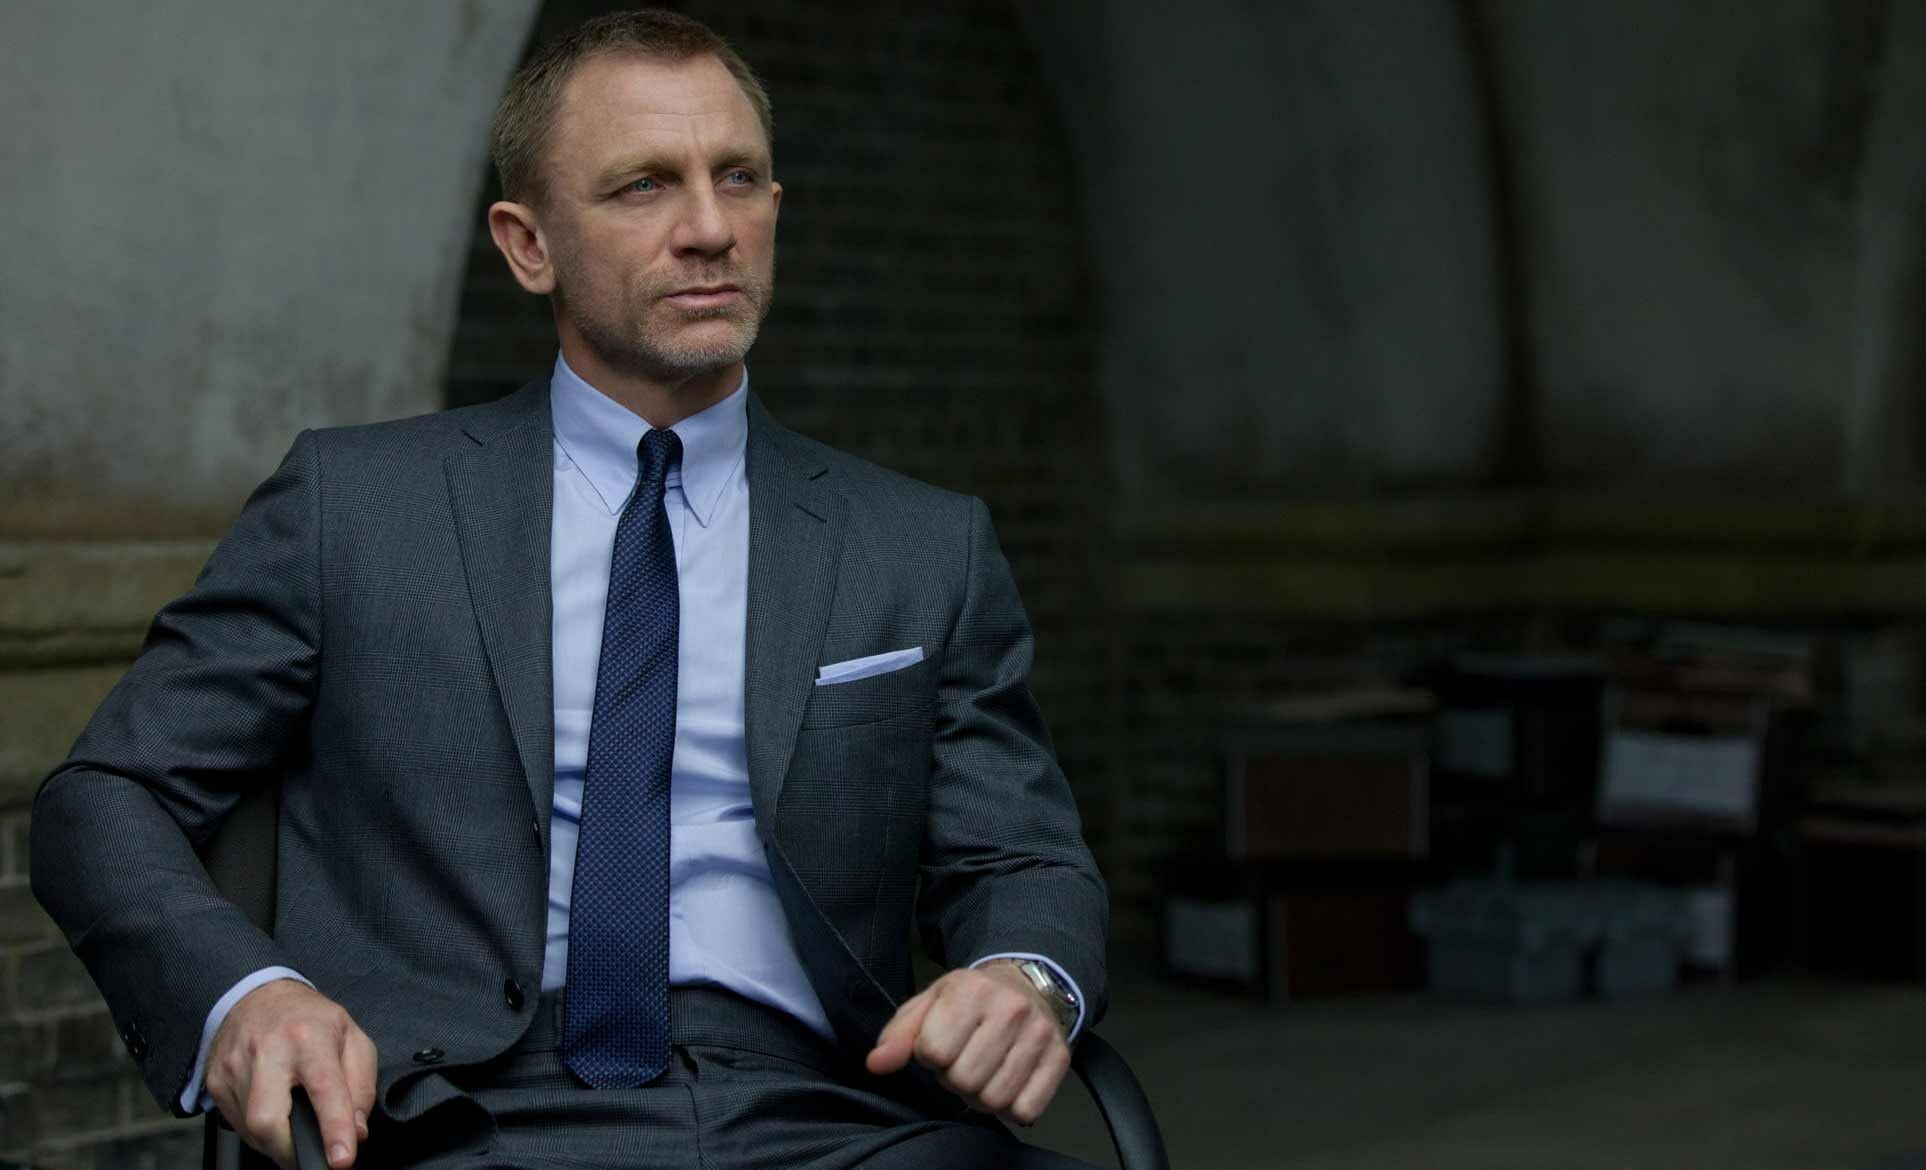 Grey Suits: 50 Ways To Wear Them